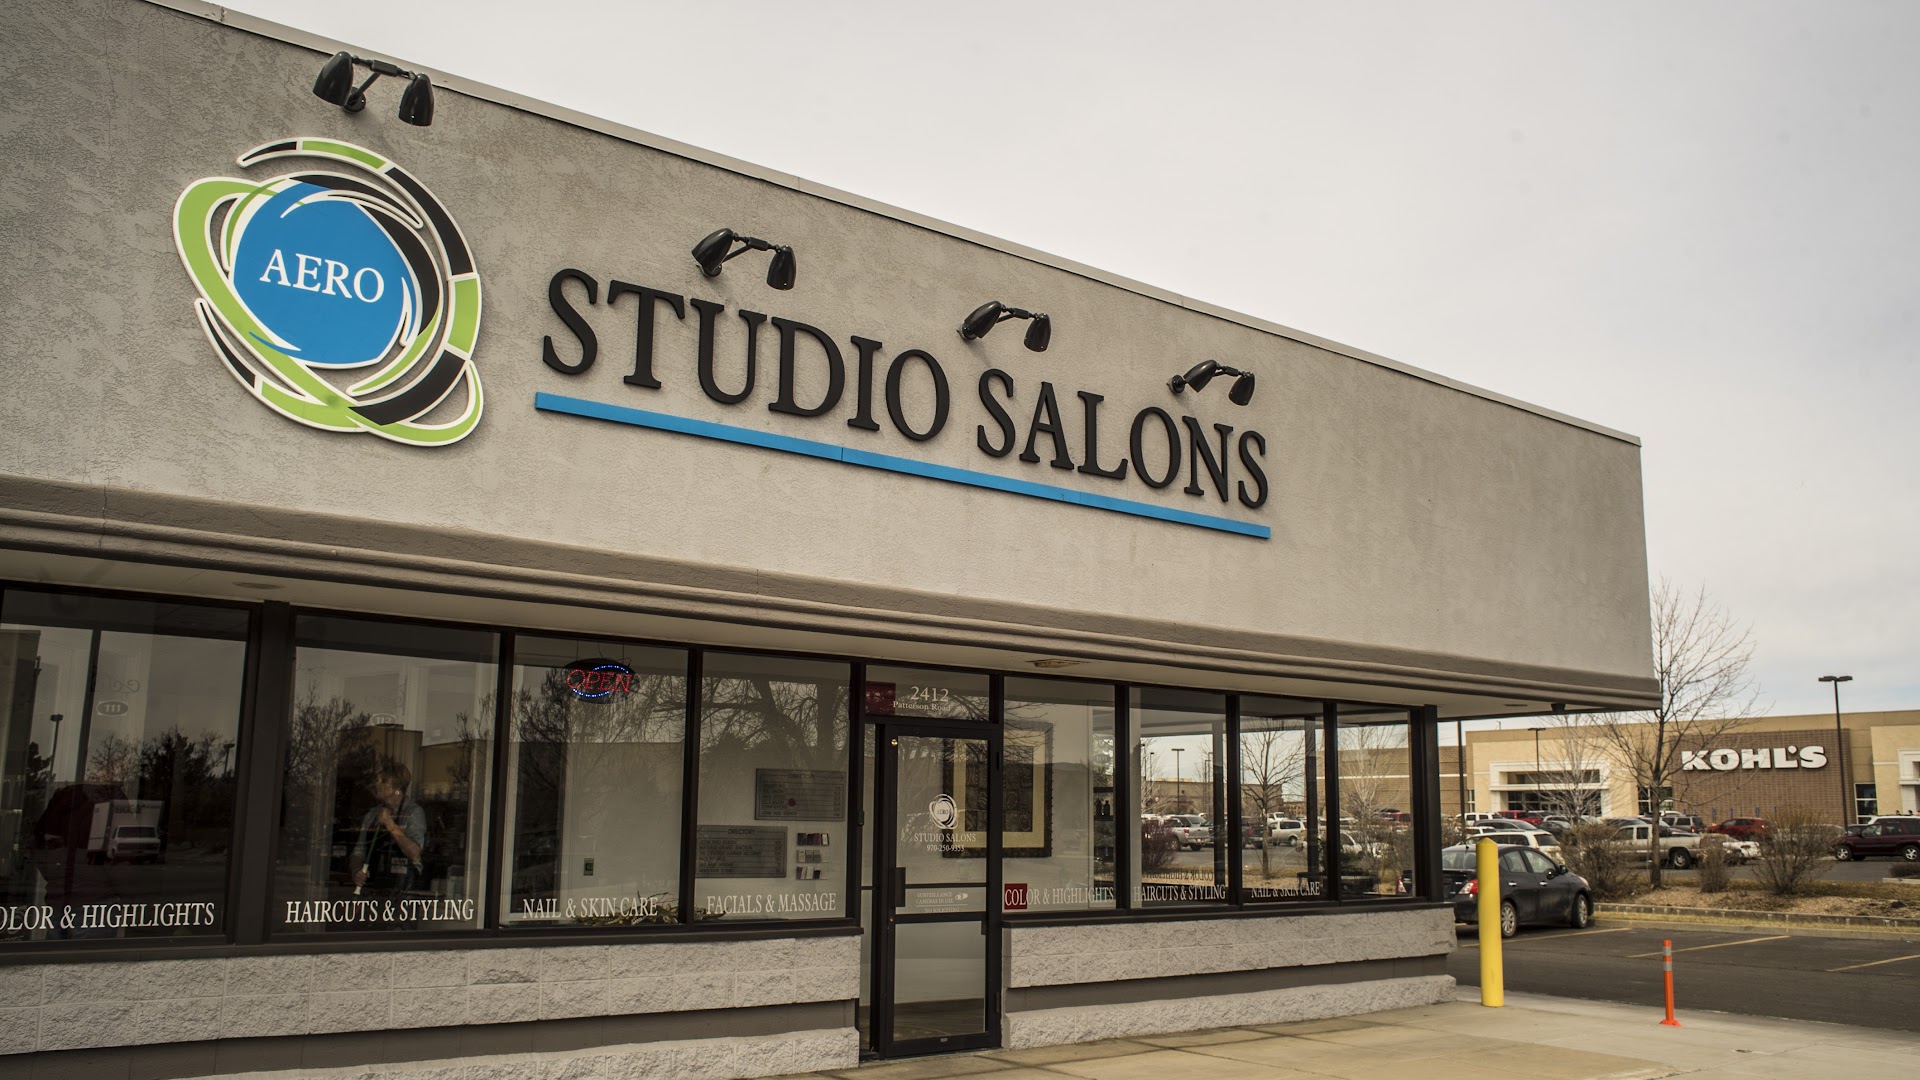 Aero Studio Salons